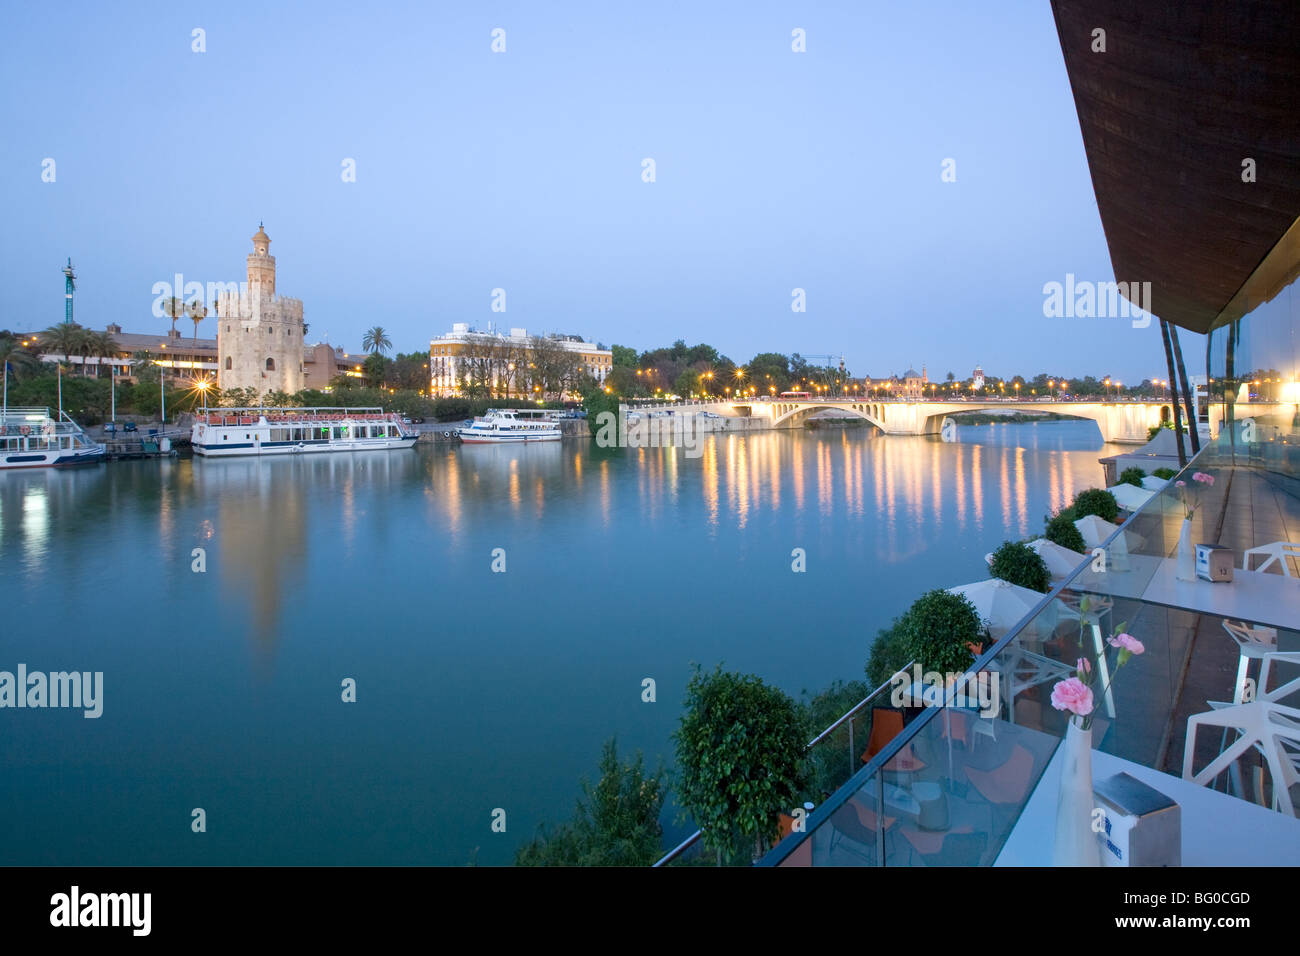 Tourist resort at the riverside, Torre Del Oro, Seville, Spain Stock Photo